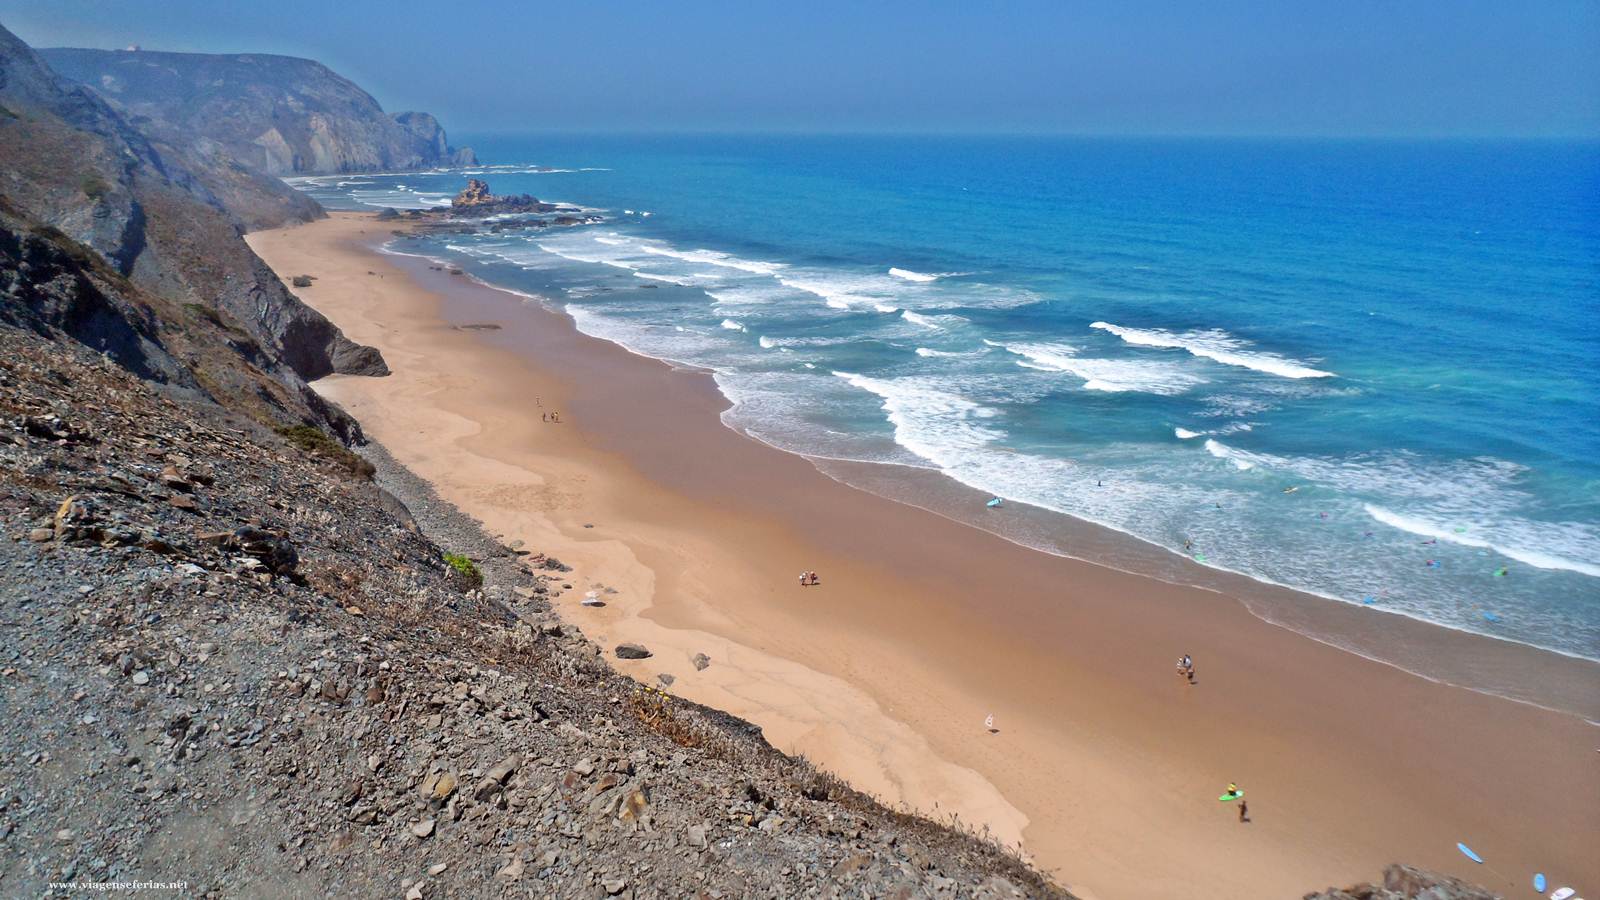 Zona Sul da praia da Cordoama que liga à praia do Castelejo